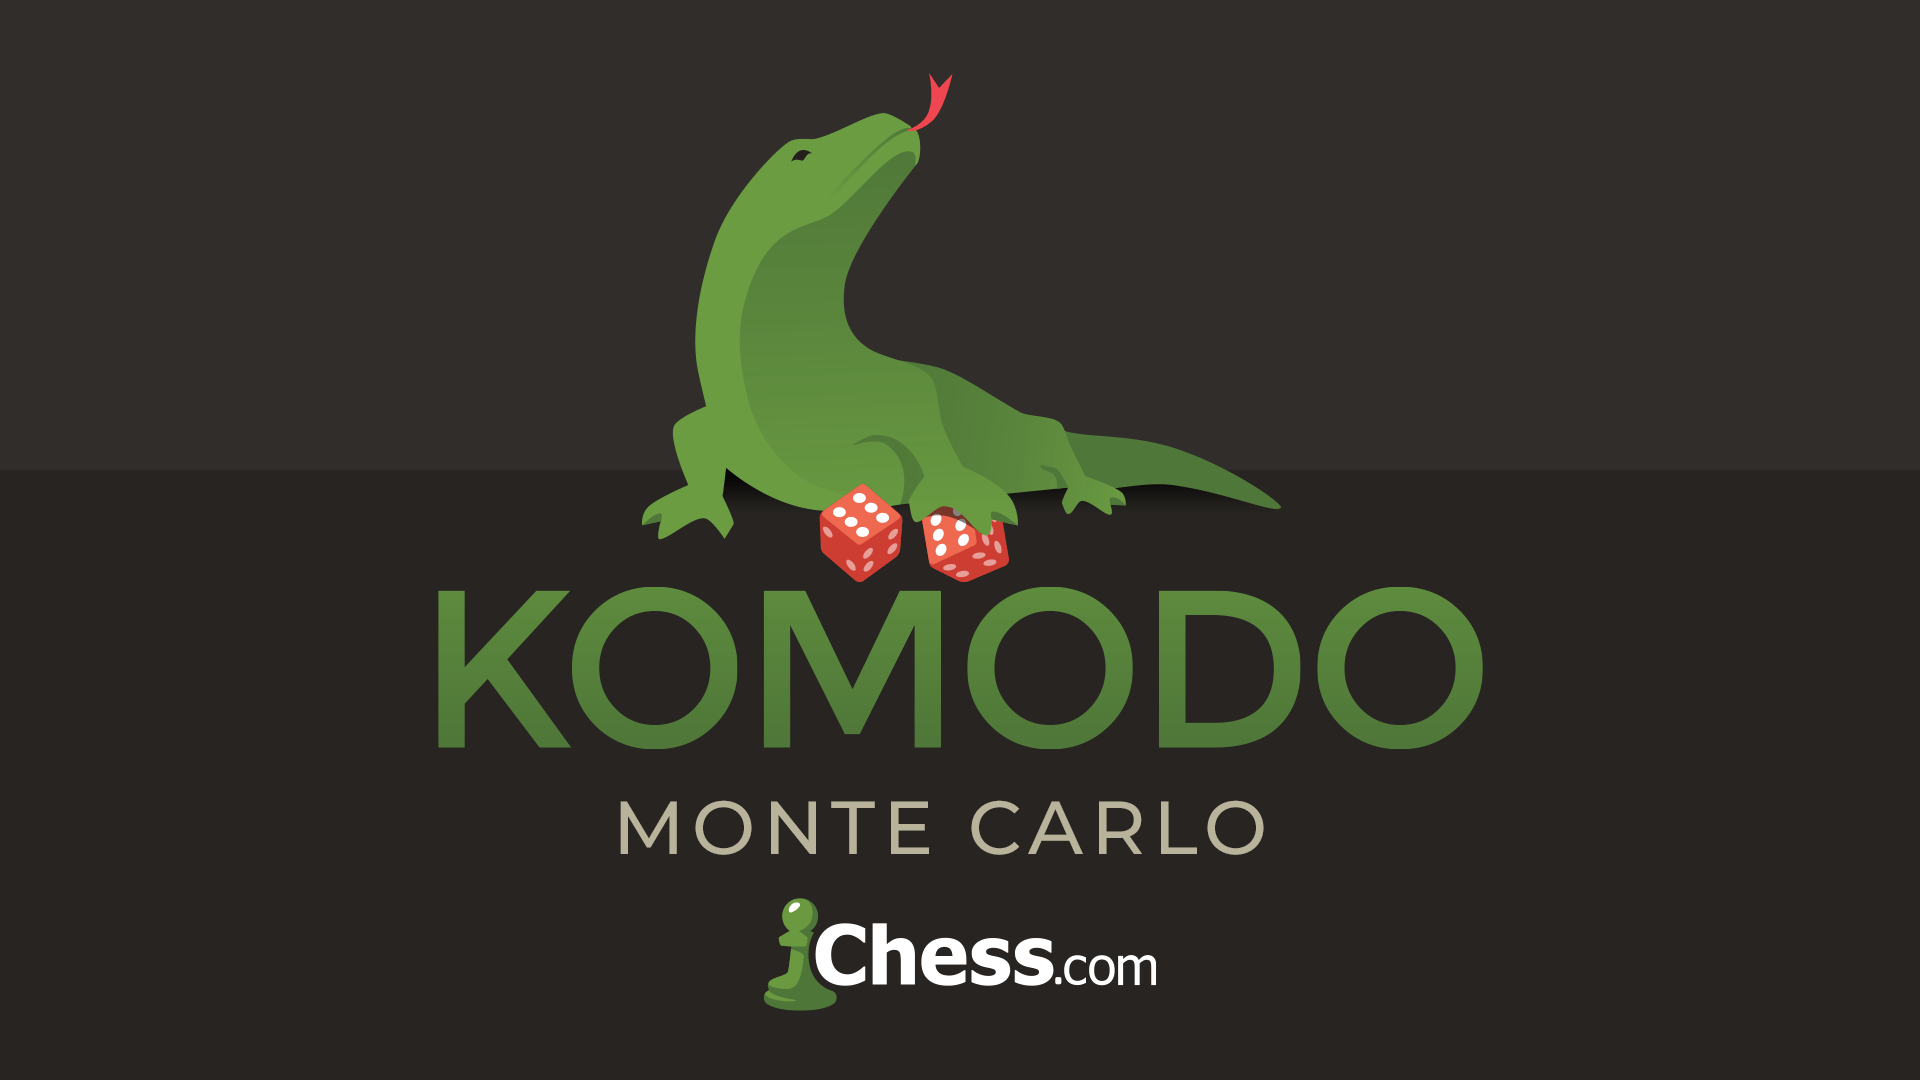 Komodo (3230) - Arasan (2741), Top Chess Engine Championship 2017 - Chess .com